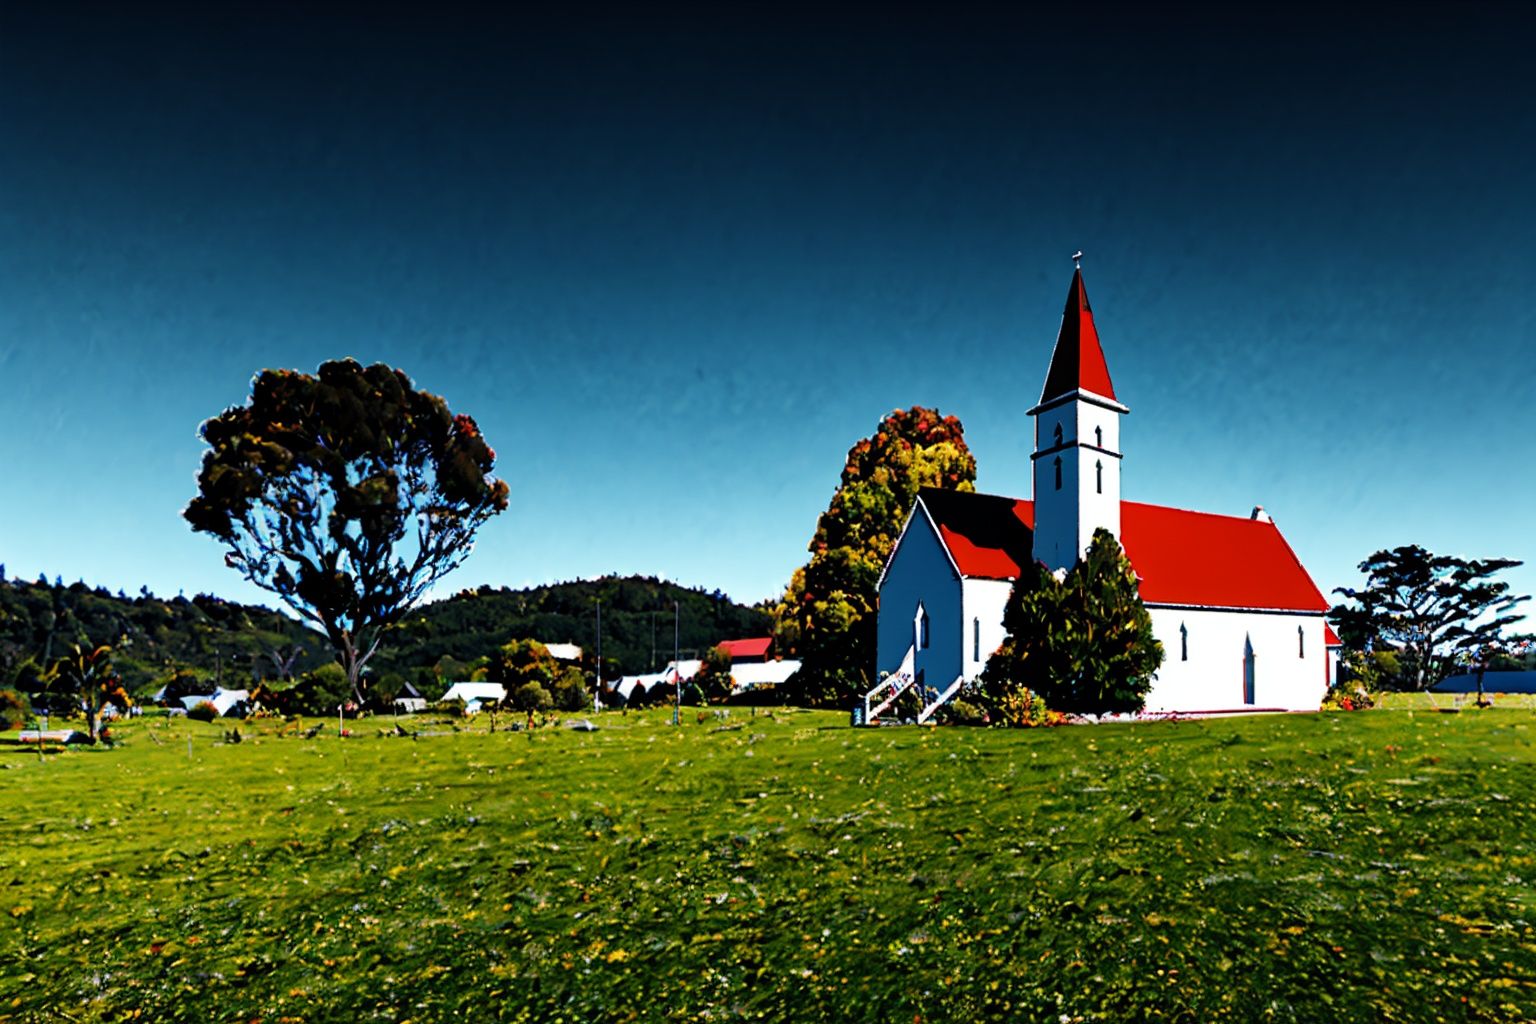 Stewart Island housing and church in New Zealand, 128k, DSLR, Kodak, octane render, masterpiece, best photography, volumetric lighting, 